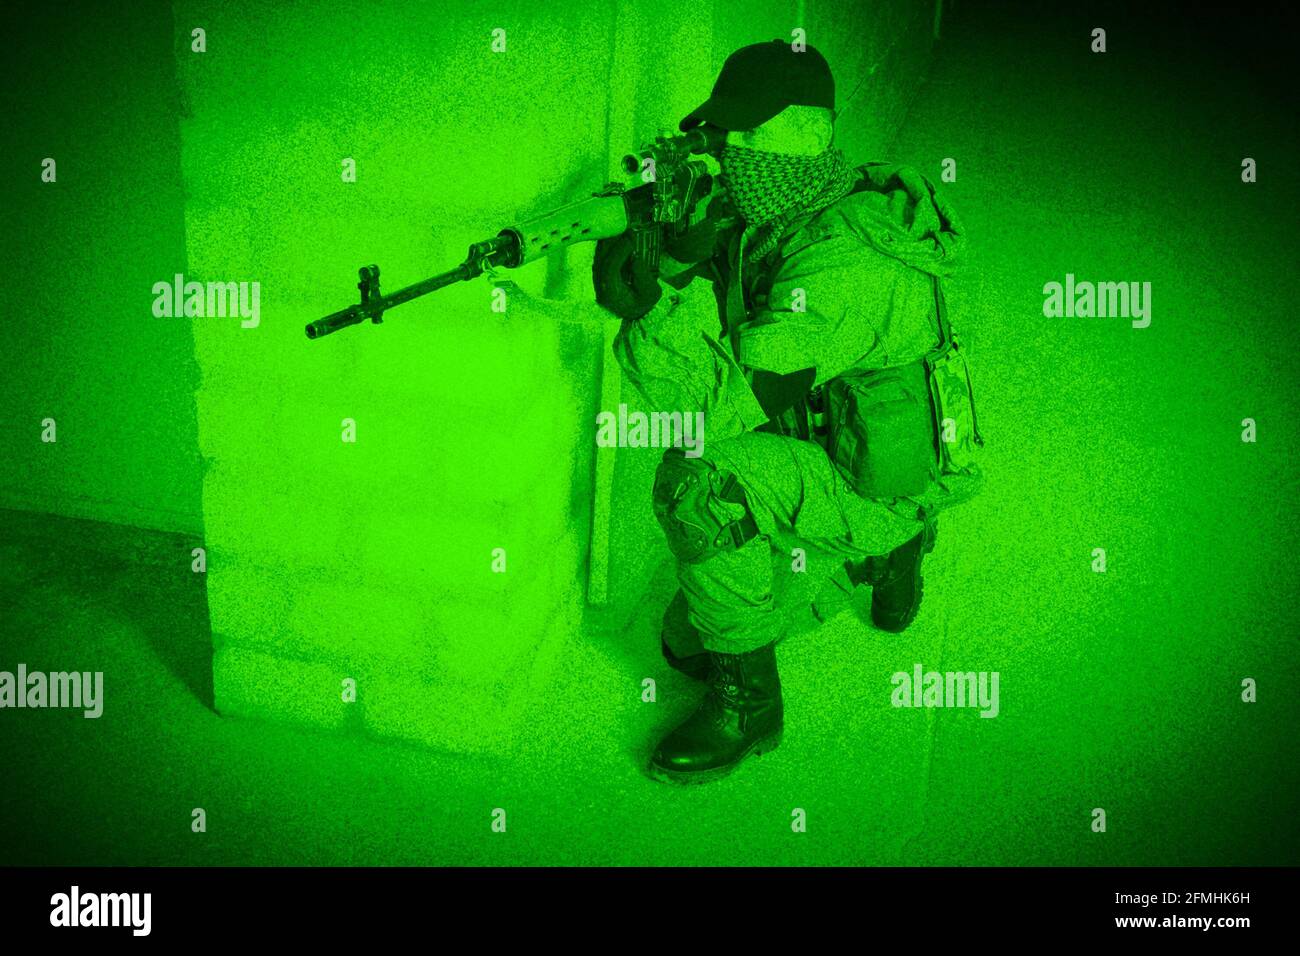 Mercenary sniper firing sniper rifle inside the building. View through night vision. Stock Photo